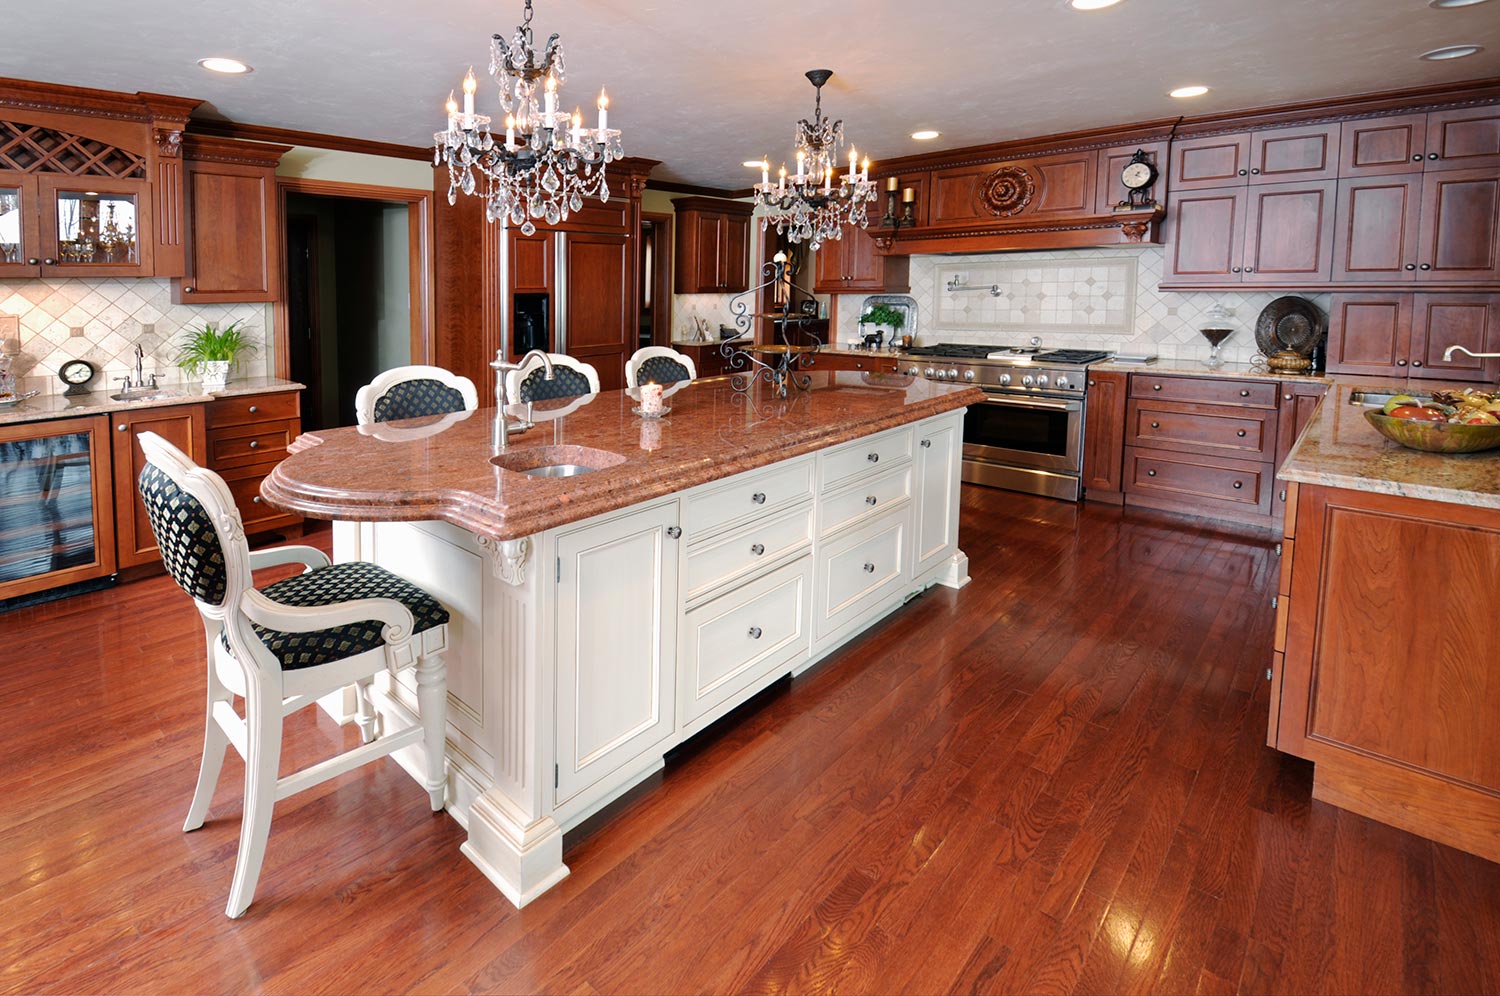 Modern kitchen with oak cabinet